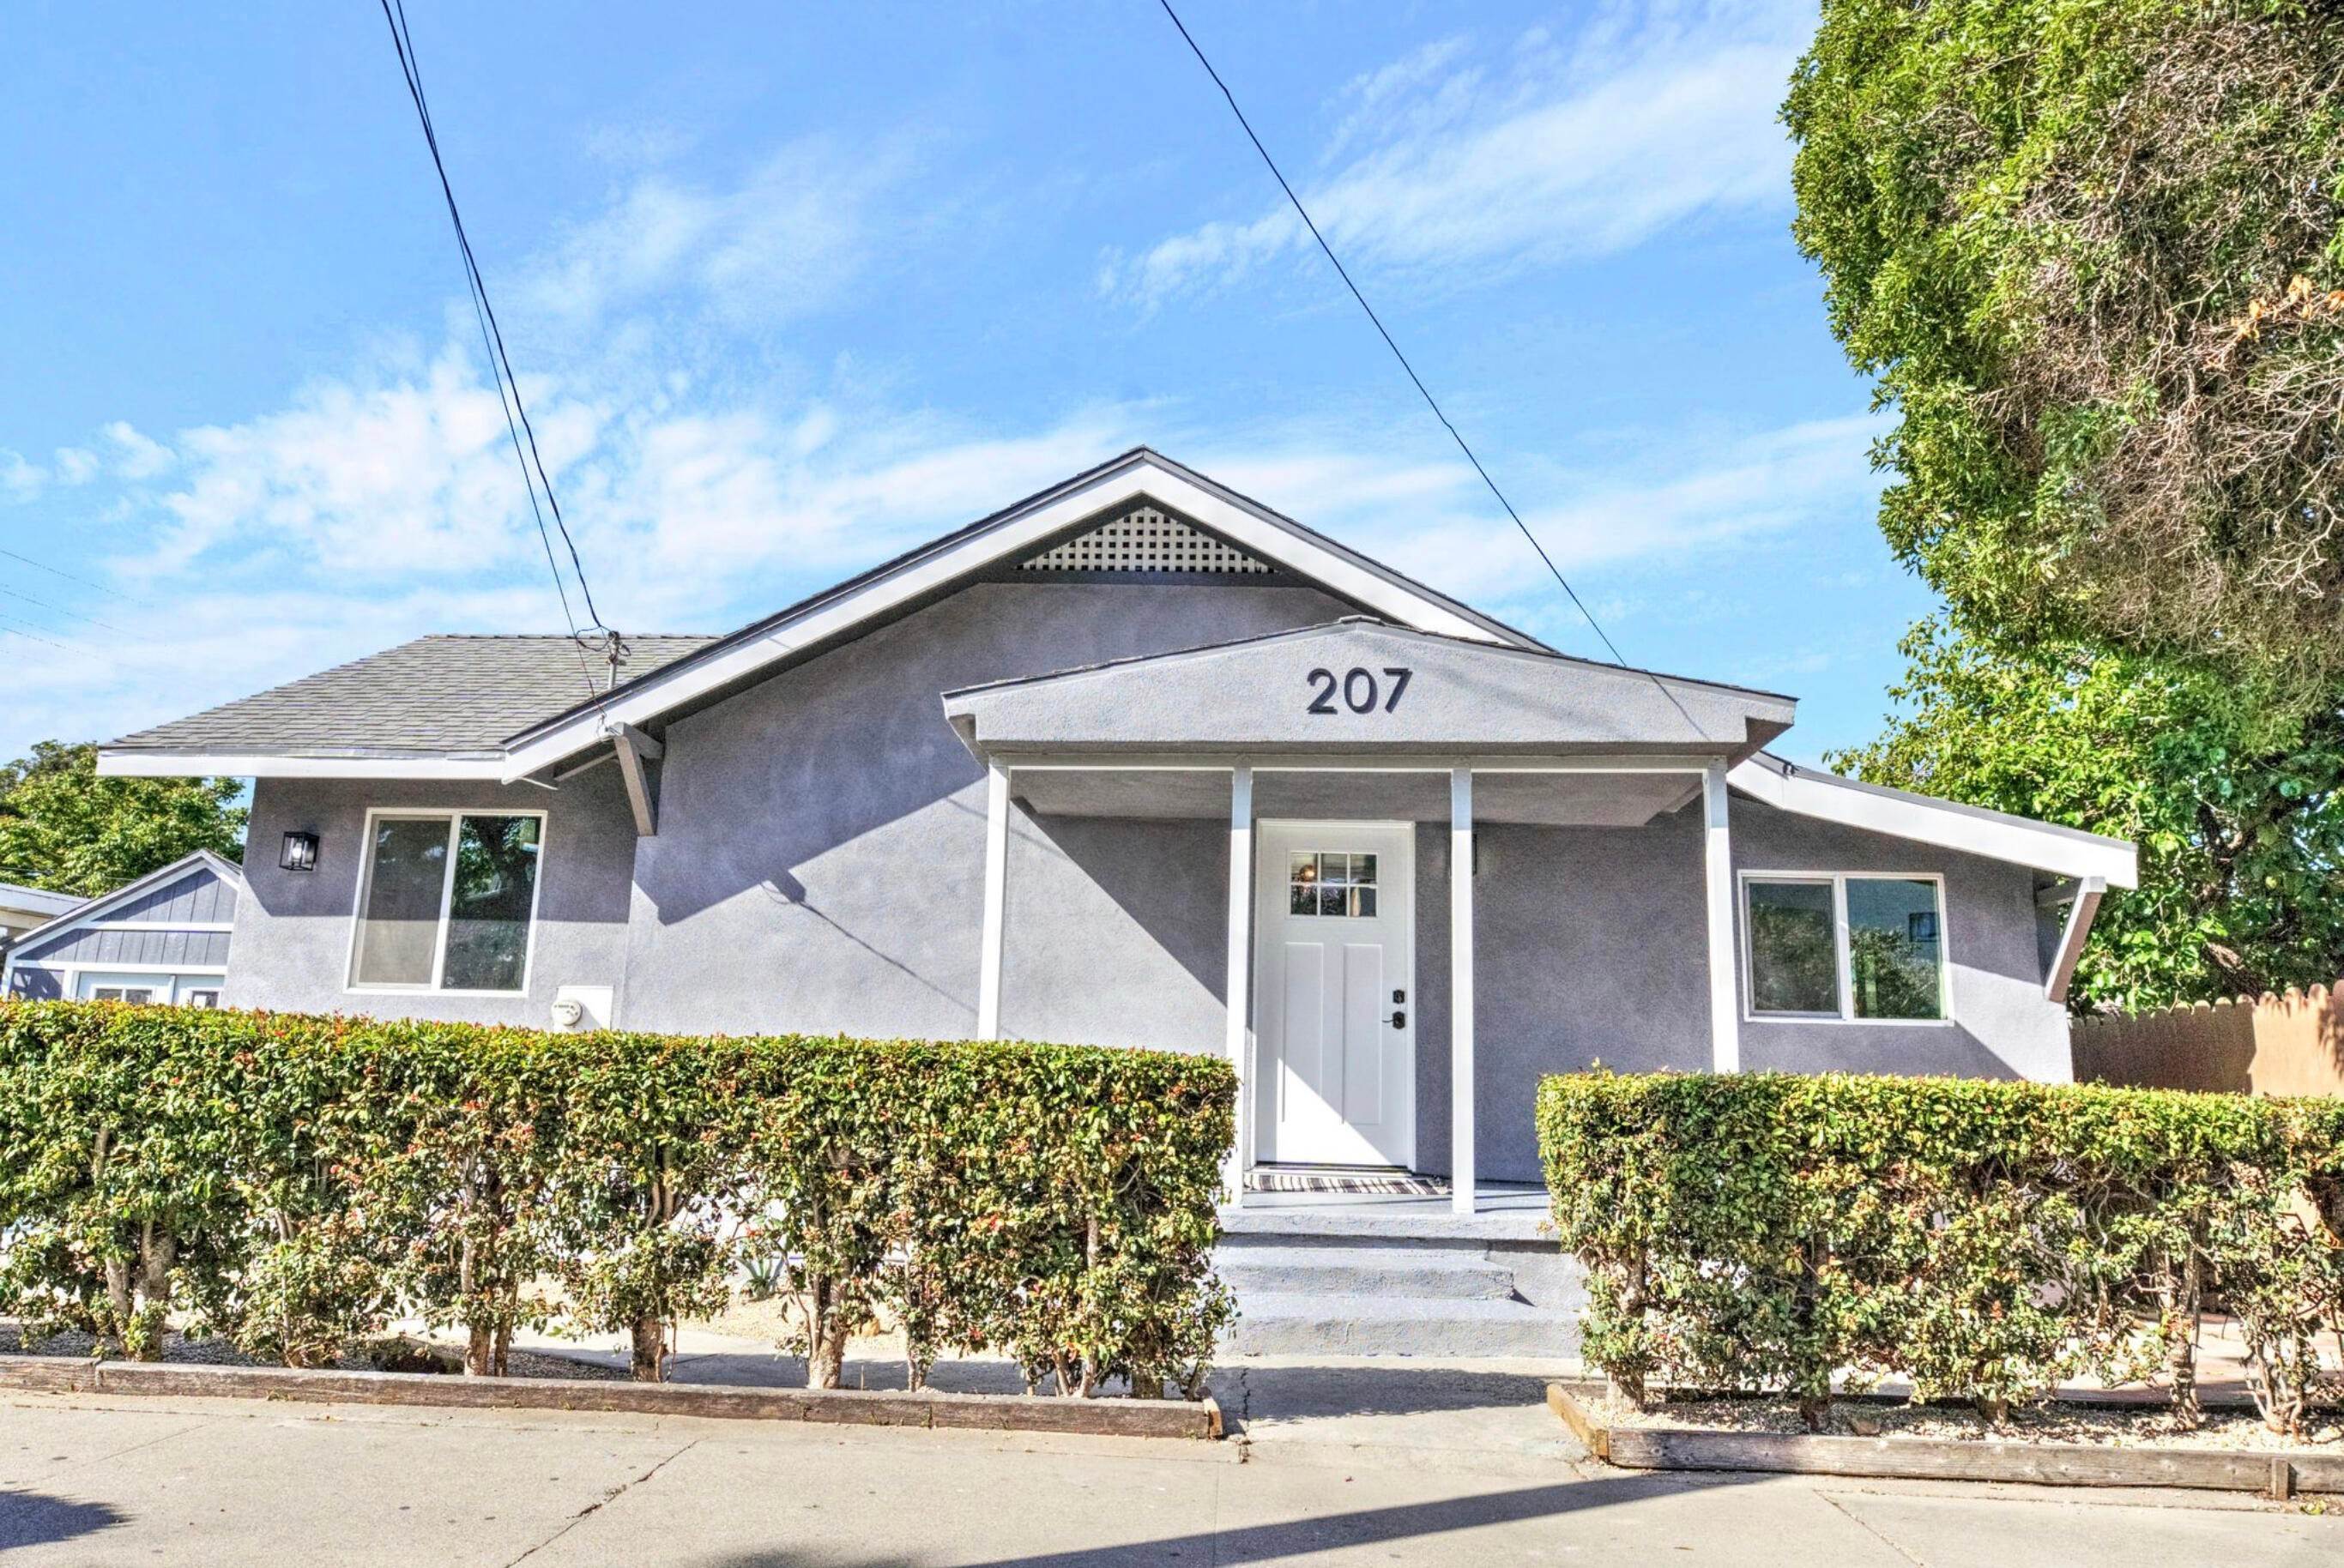 19. Estate for Sale at 207 N Alisos Street Santa Barbara, California 93103 United States